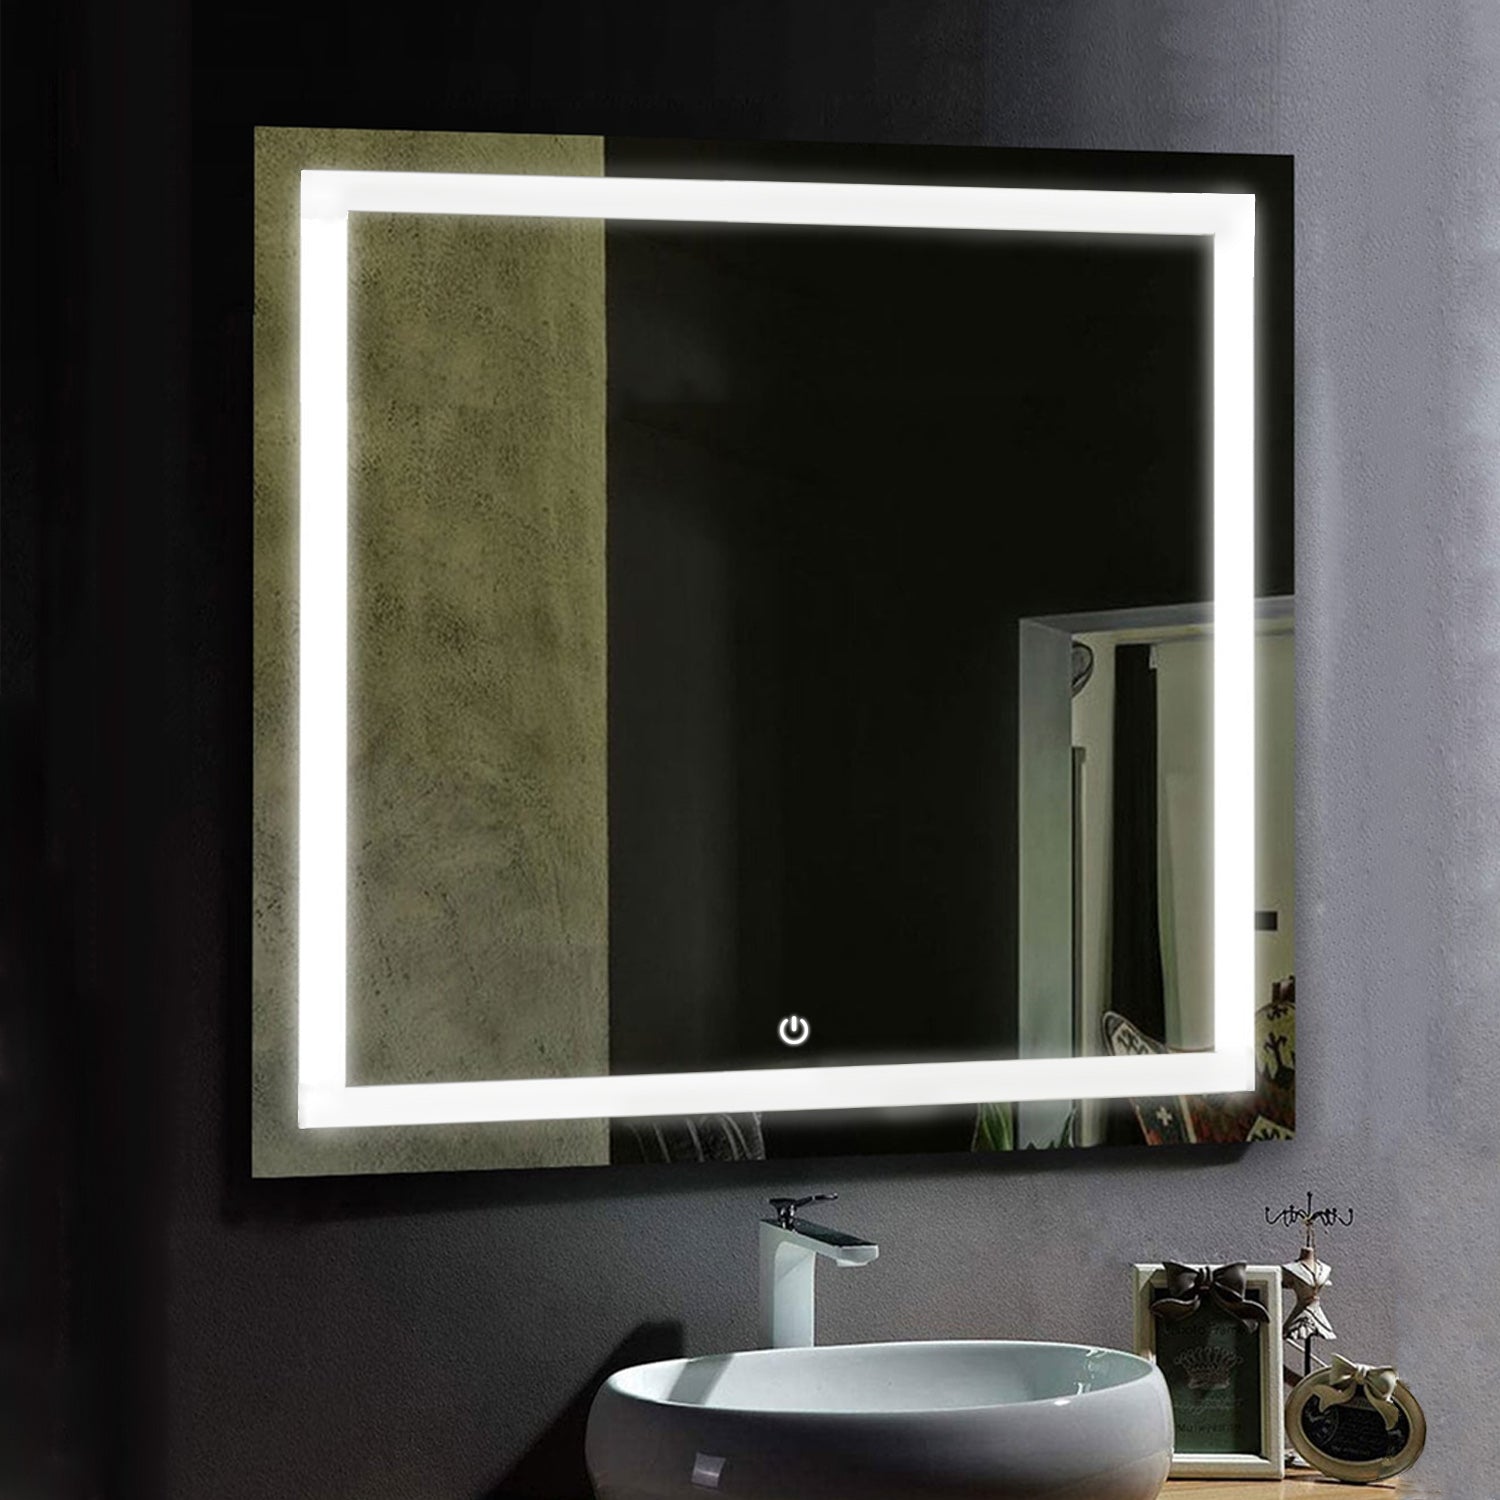 How to install LED Anti Fog Bathroom Mirror 